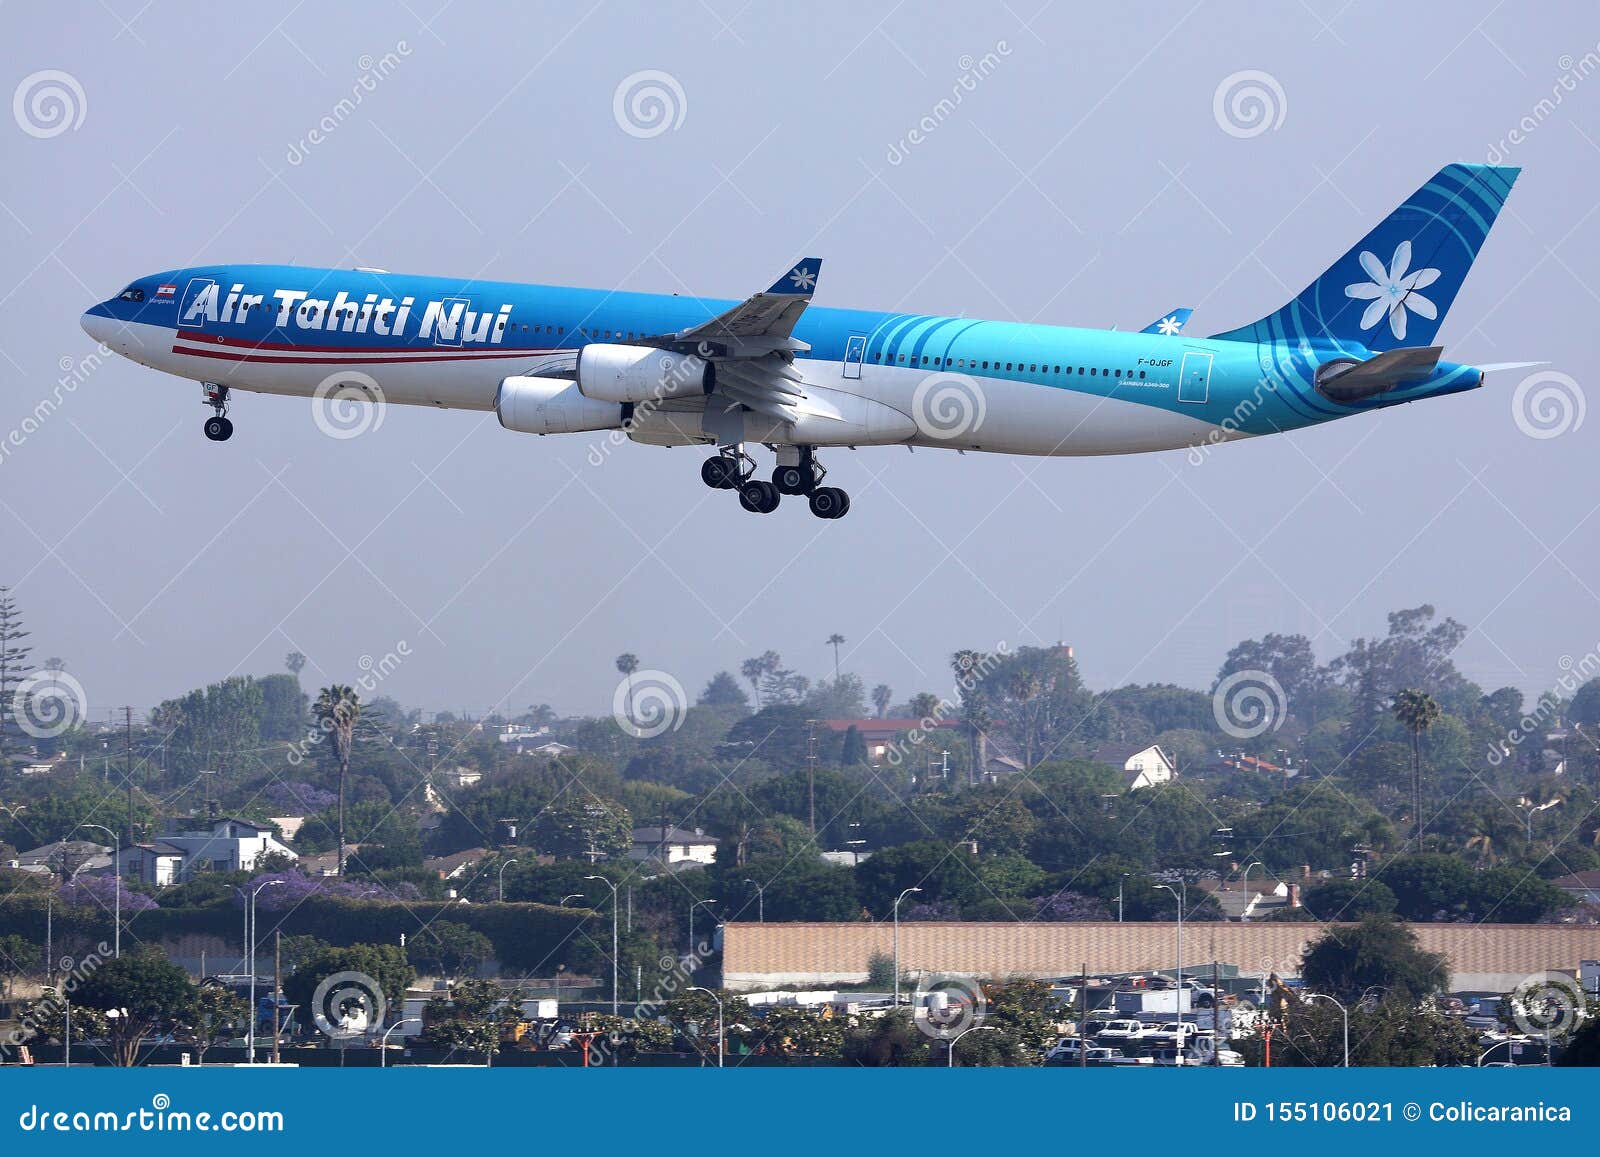 Air Tahiti Nui Landing on Los Angeles Airport, LAX Editorial Photo